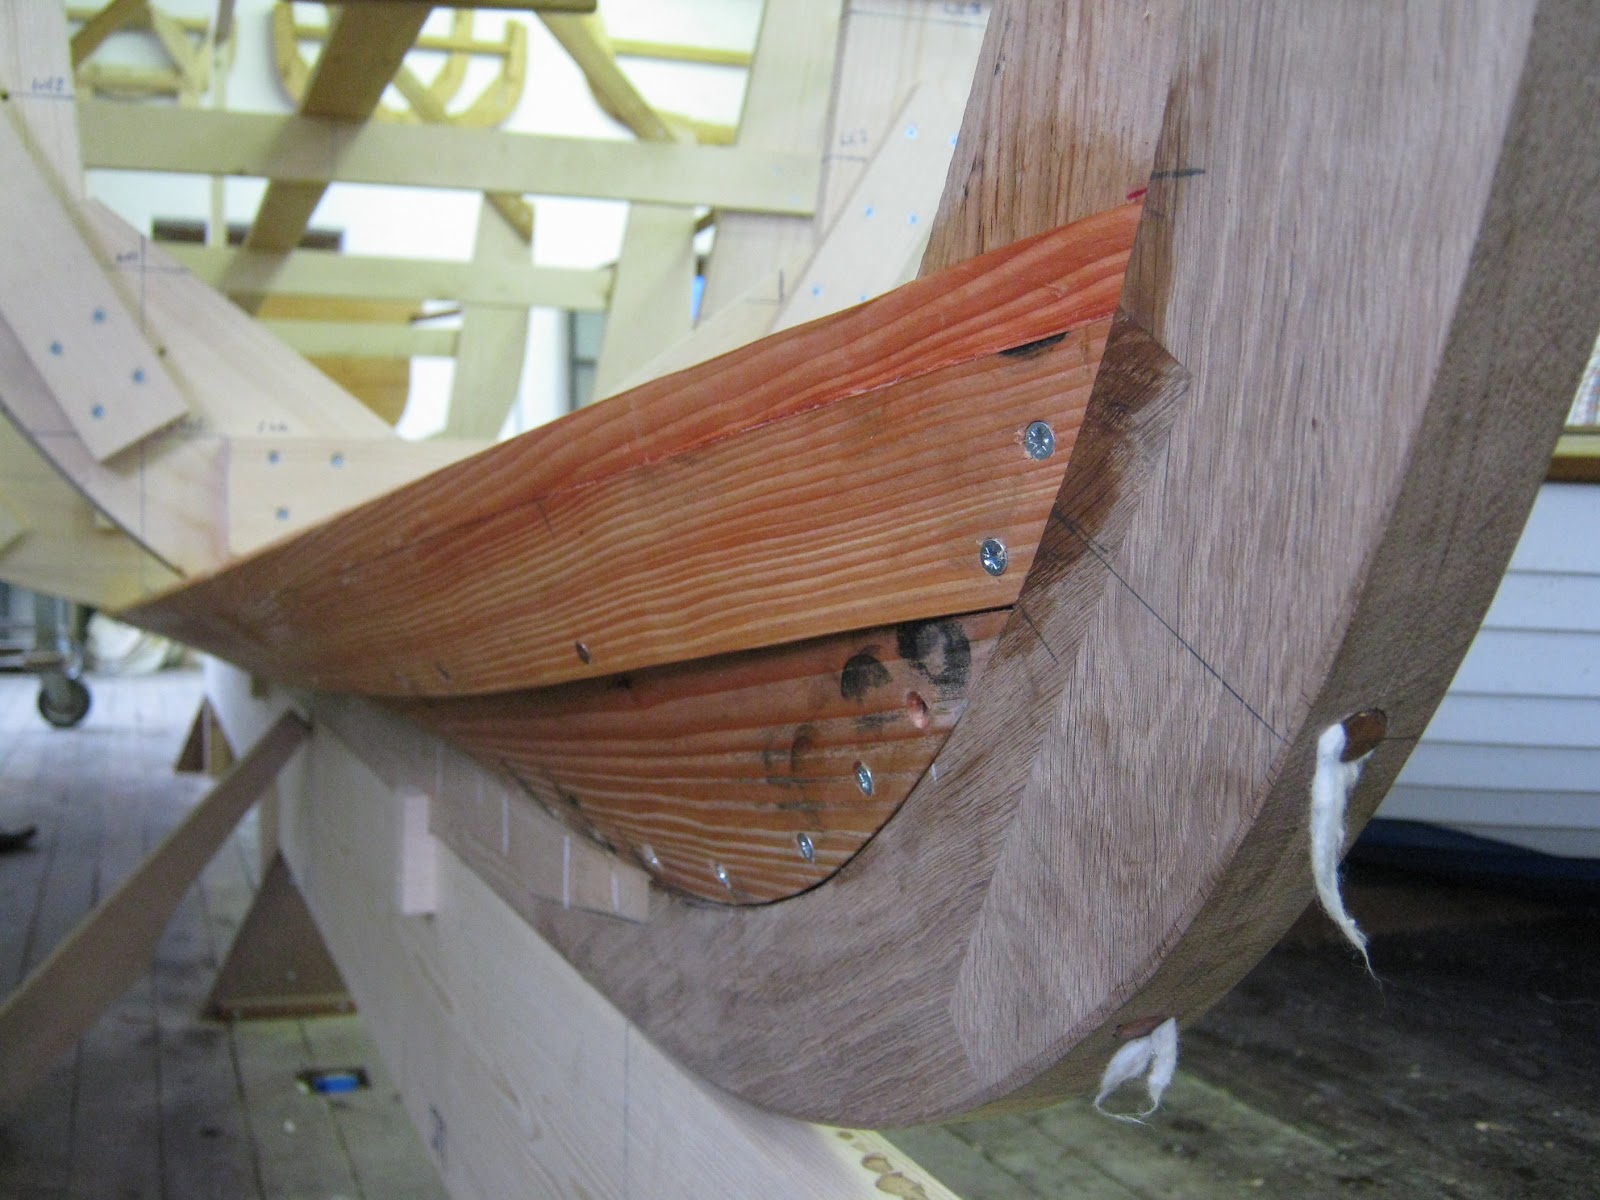 PR Boat: Looking for Planking a clinker boat